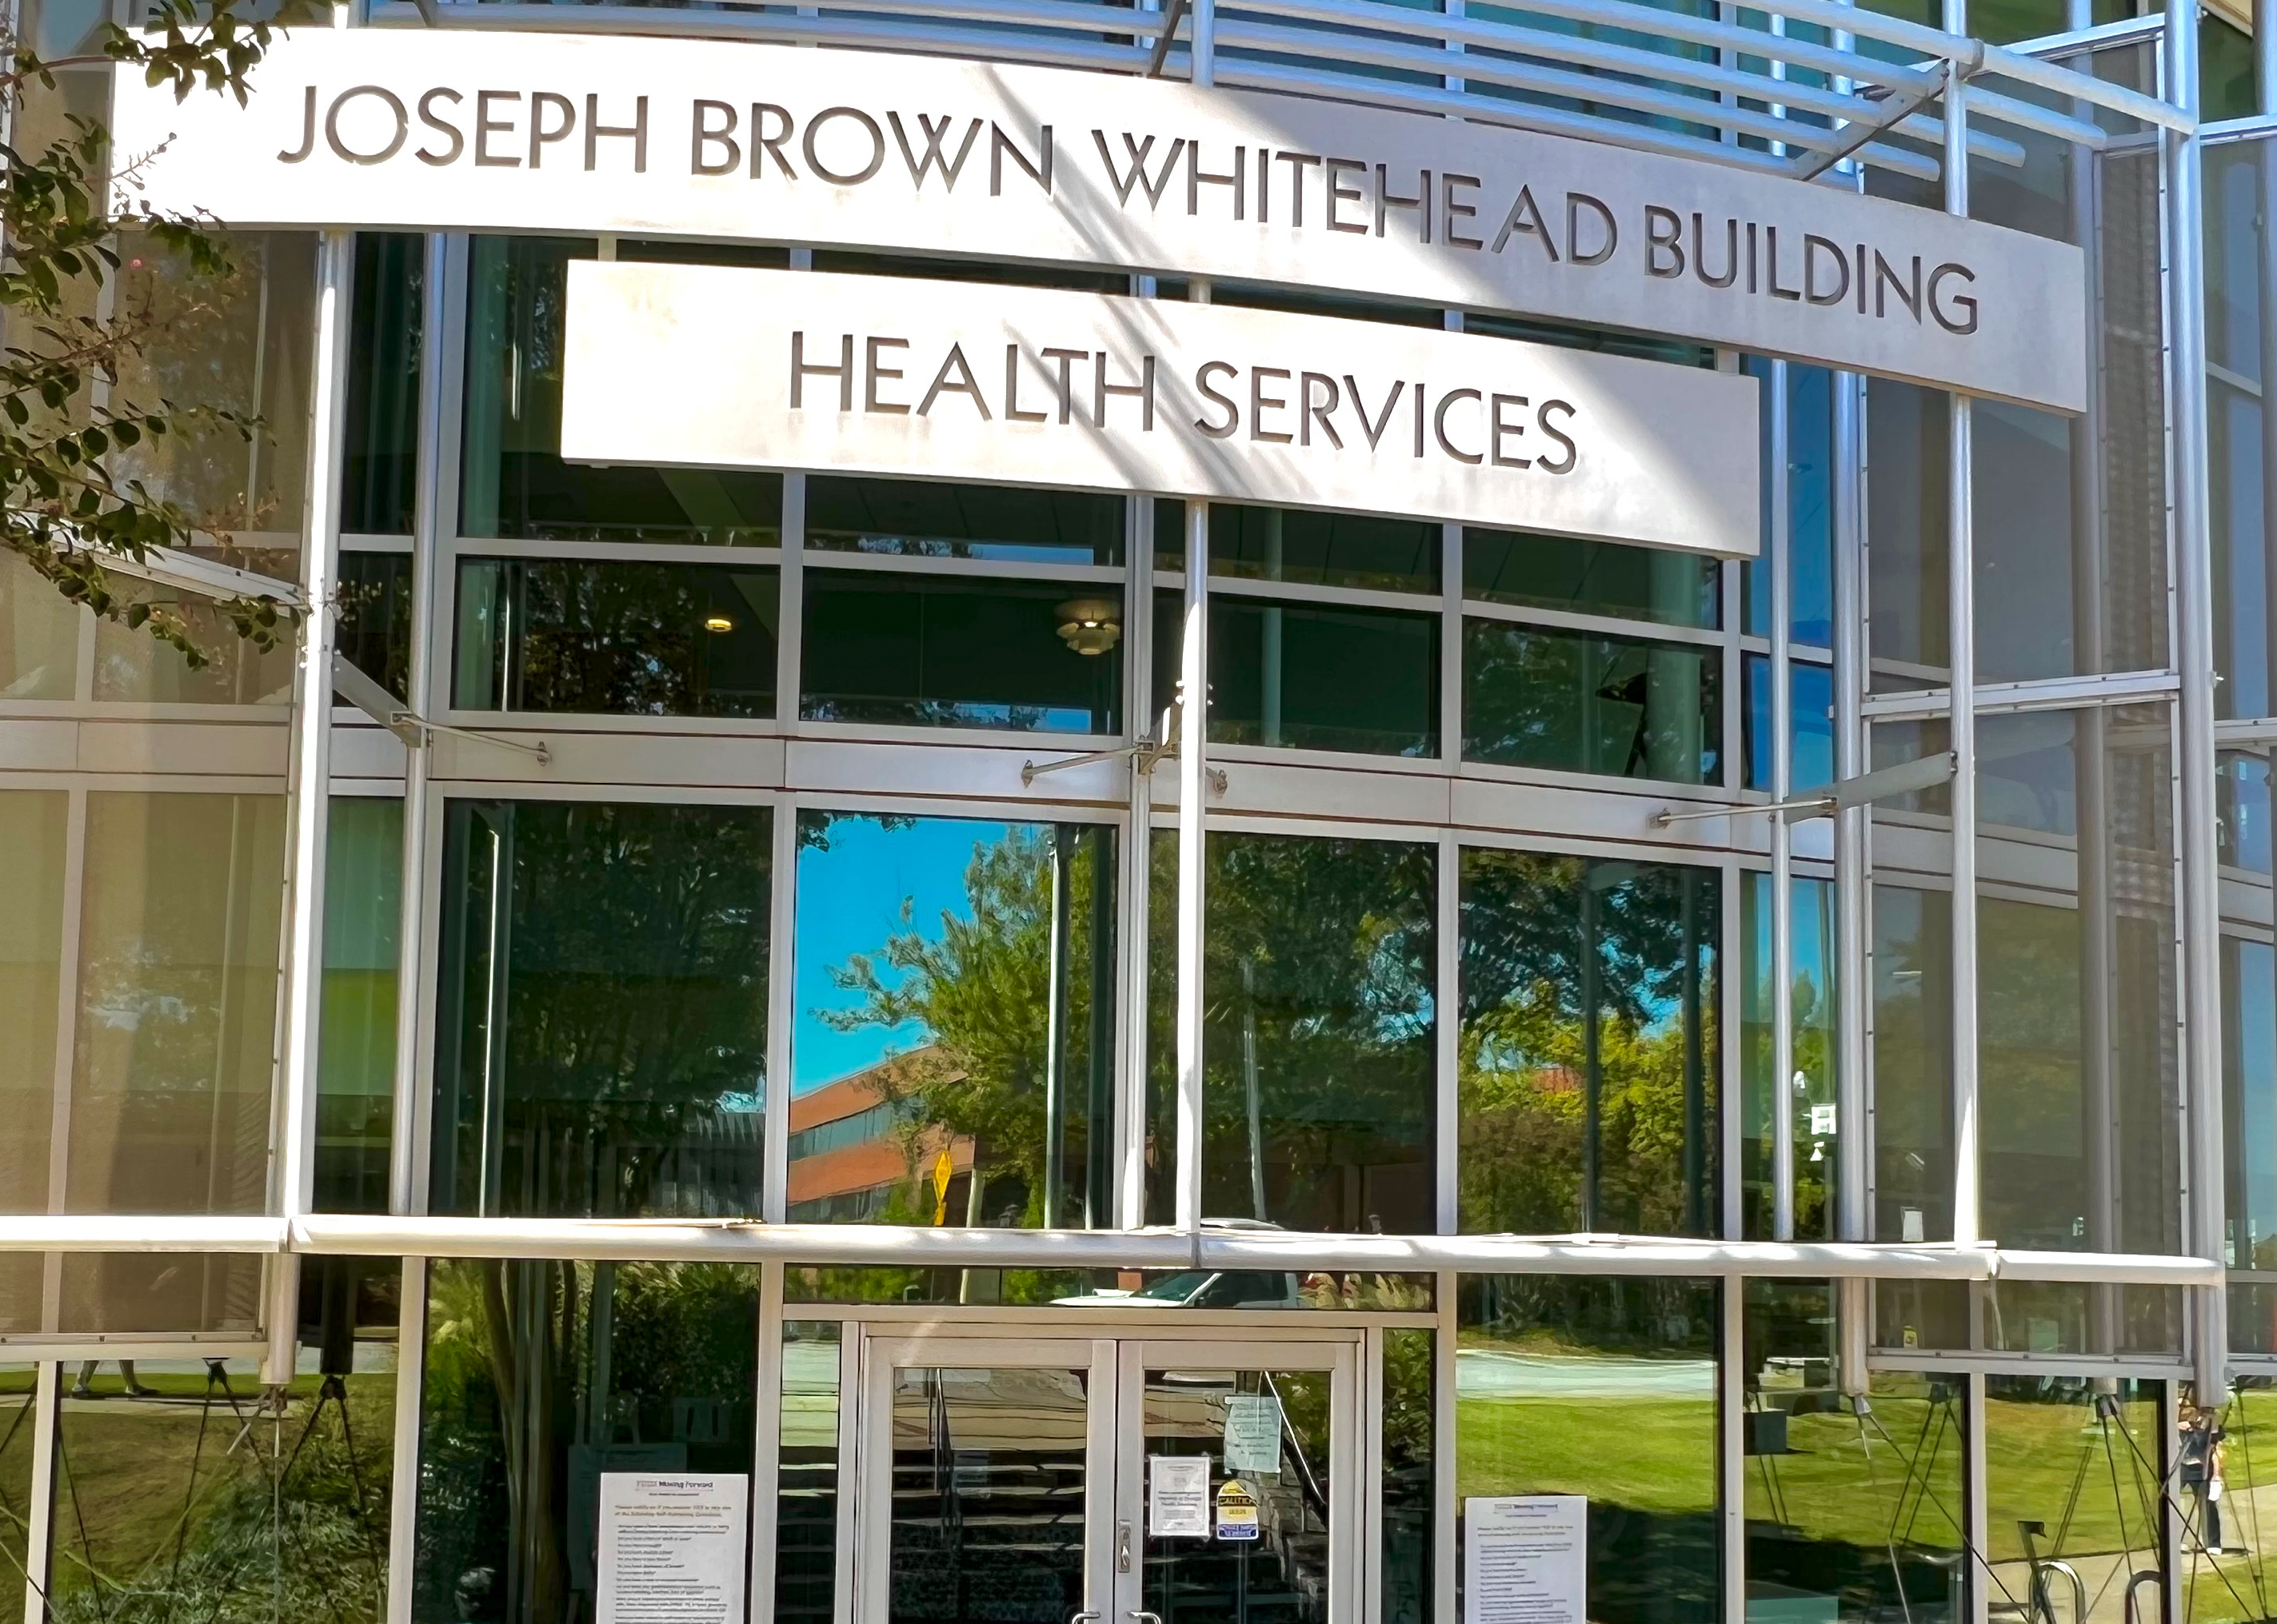 Joseph Brown Whitehead Building Health Services entrance.